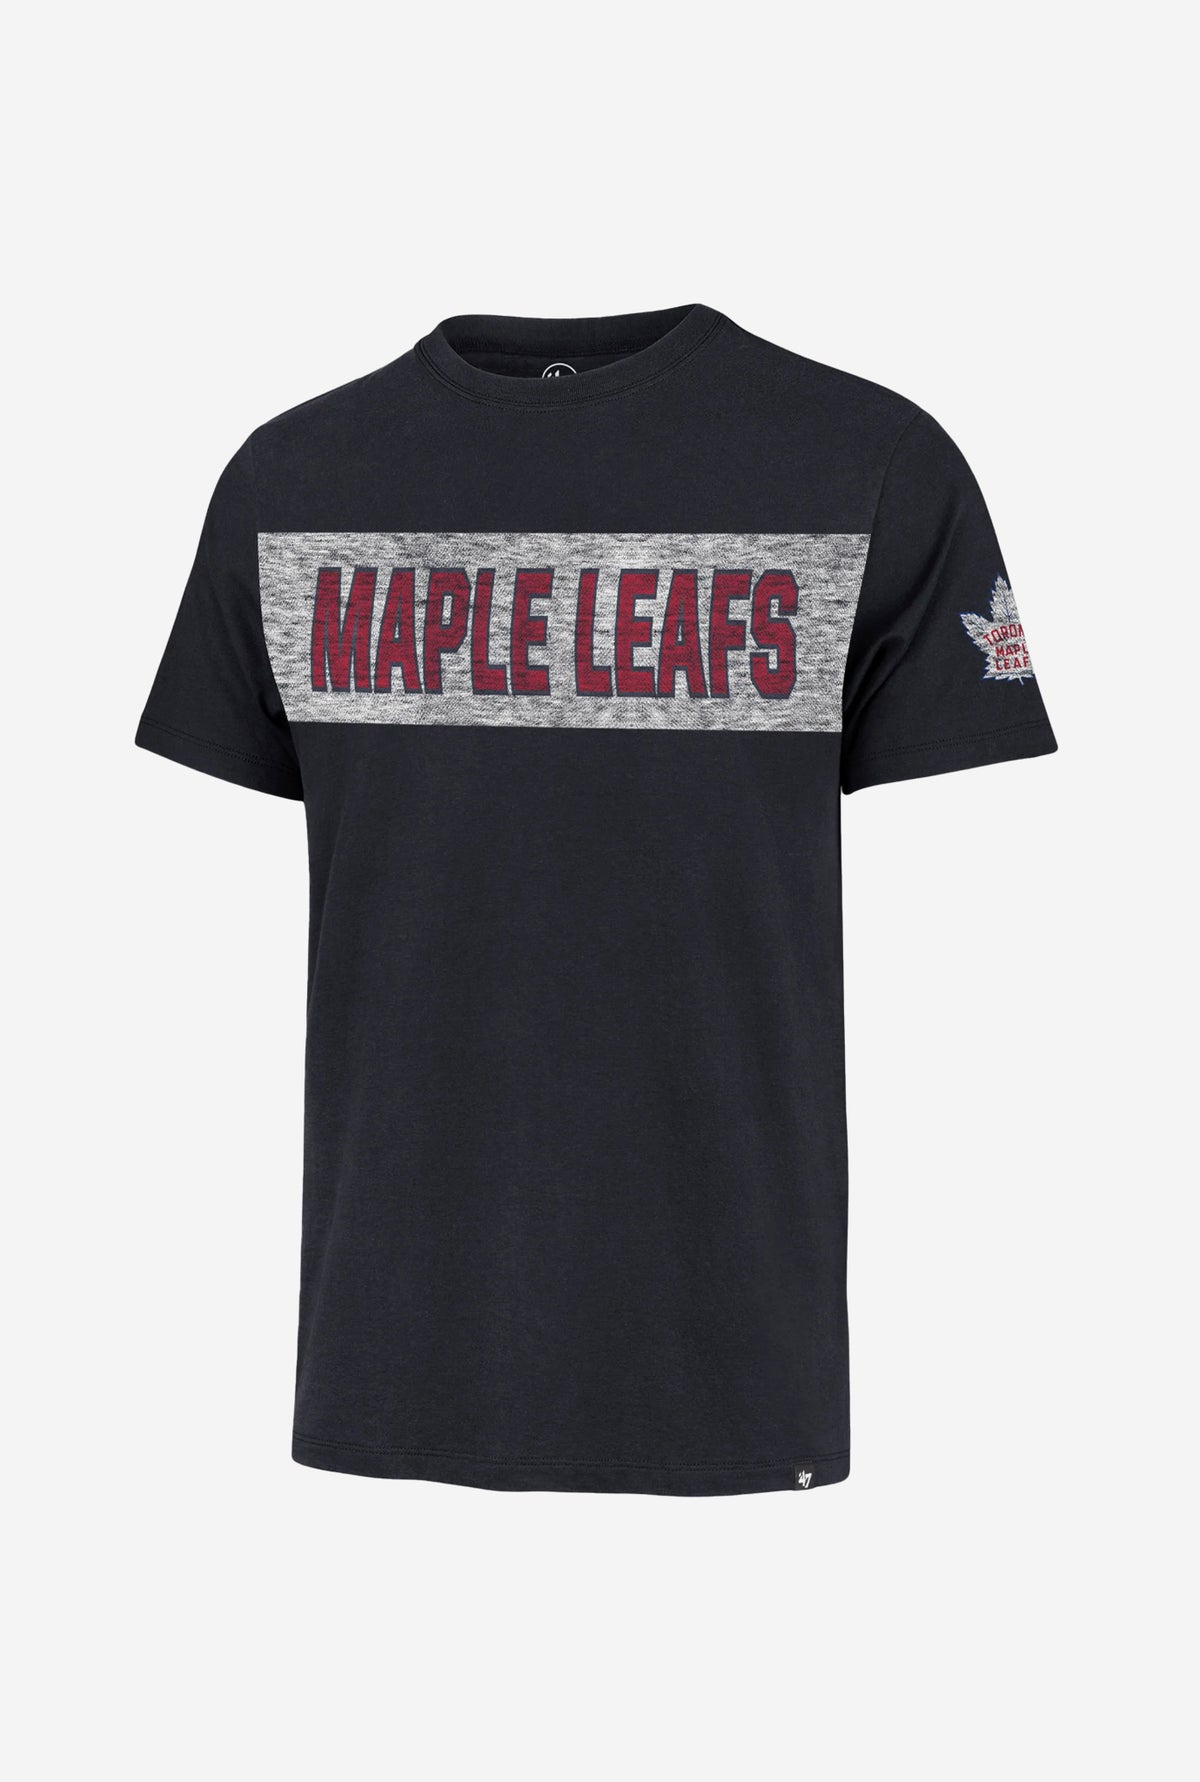 Toronto Maple Leafs Top Shelf Franklin T-Shirt